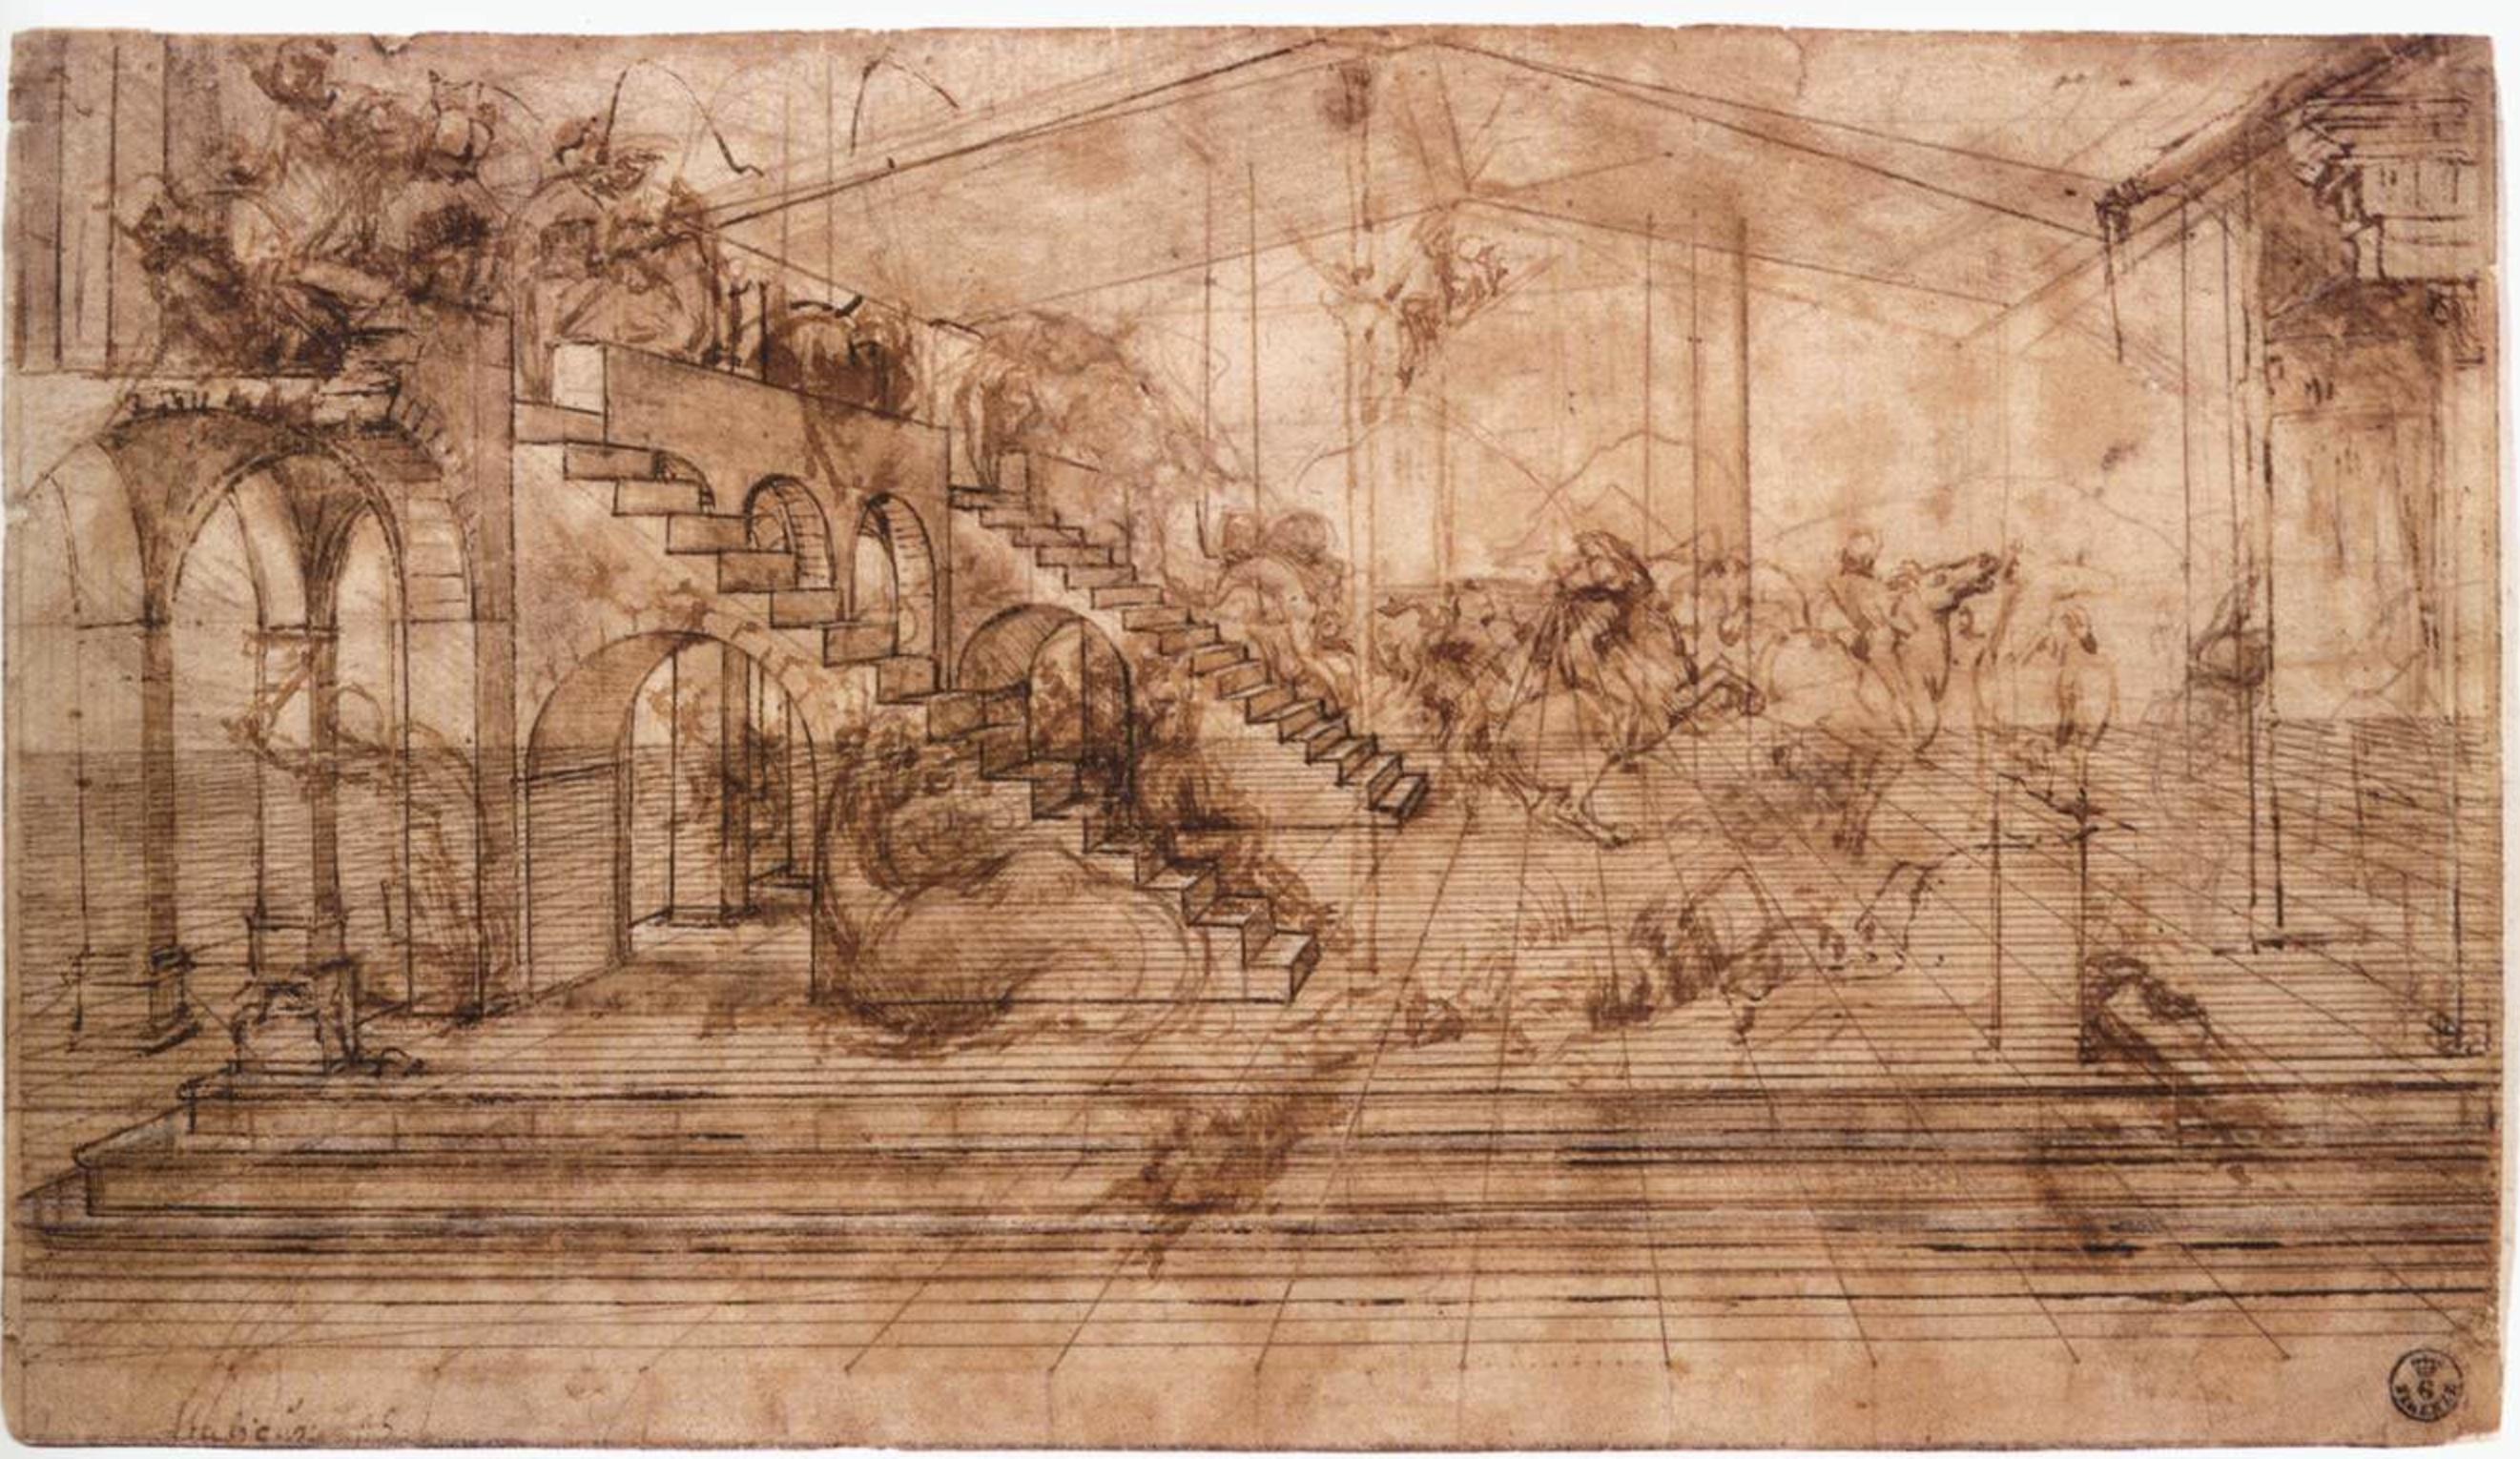 A sketch by Leonardo da Vinci